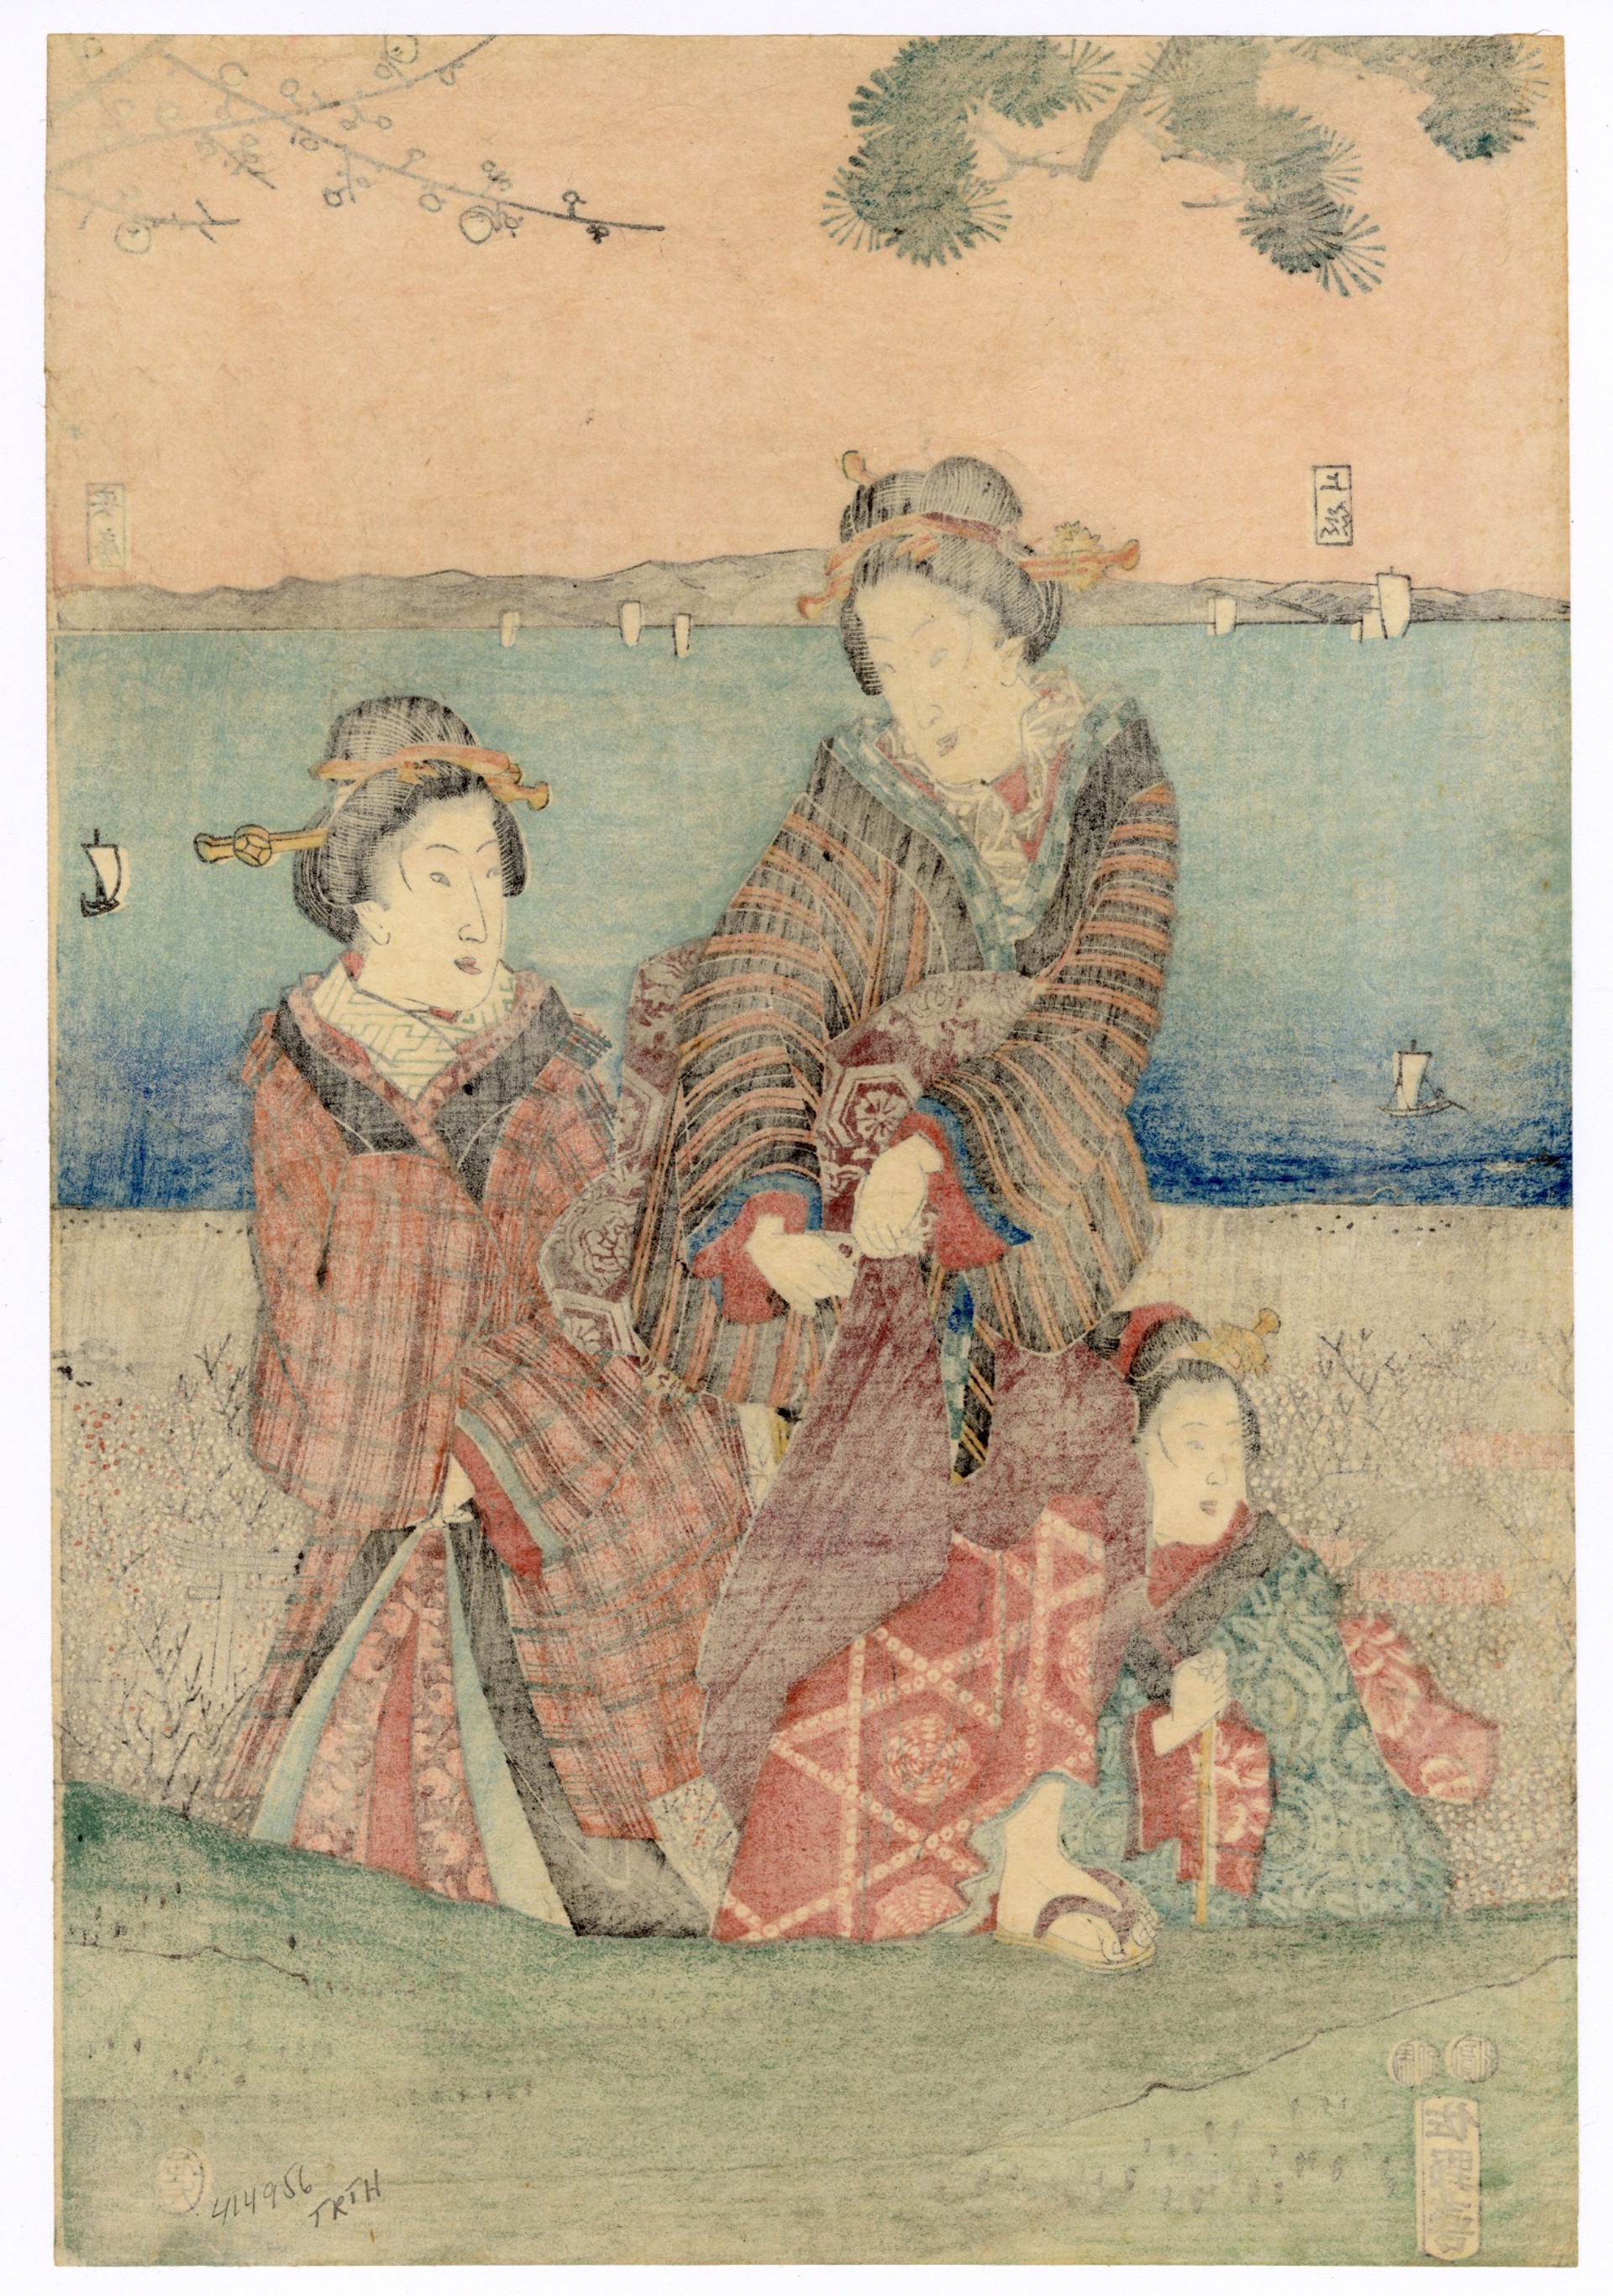 Bushu Sugita Plum Grove by Hiroshige